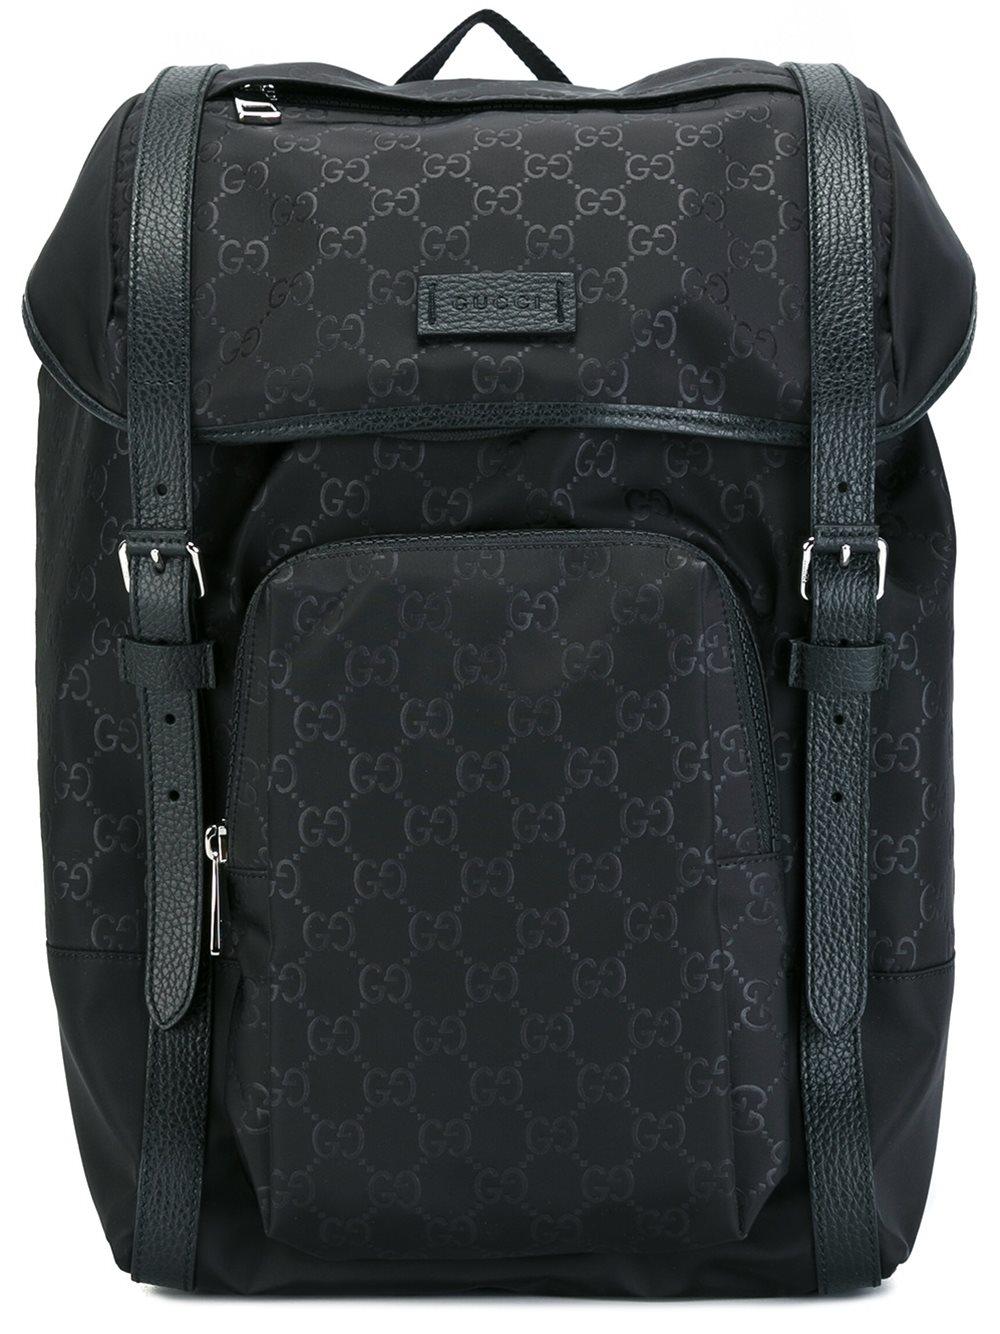 Gucci Logo Print Backpack in Black for Men - Lyst